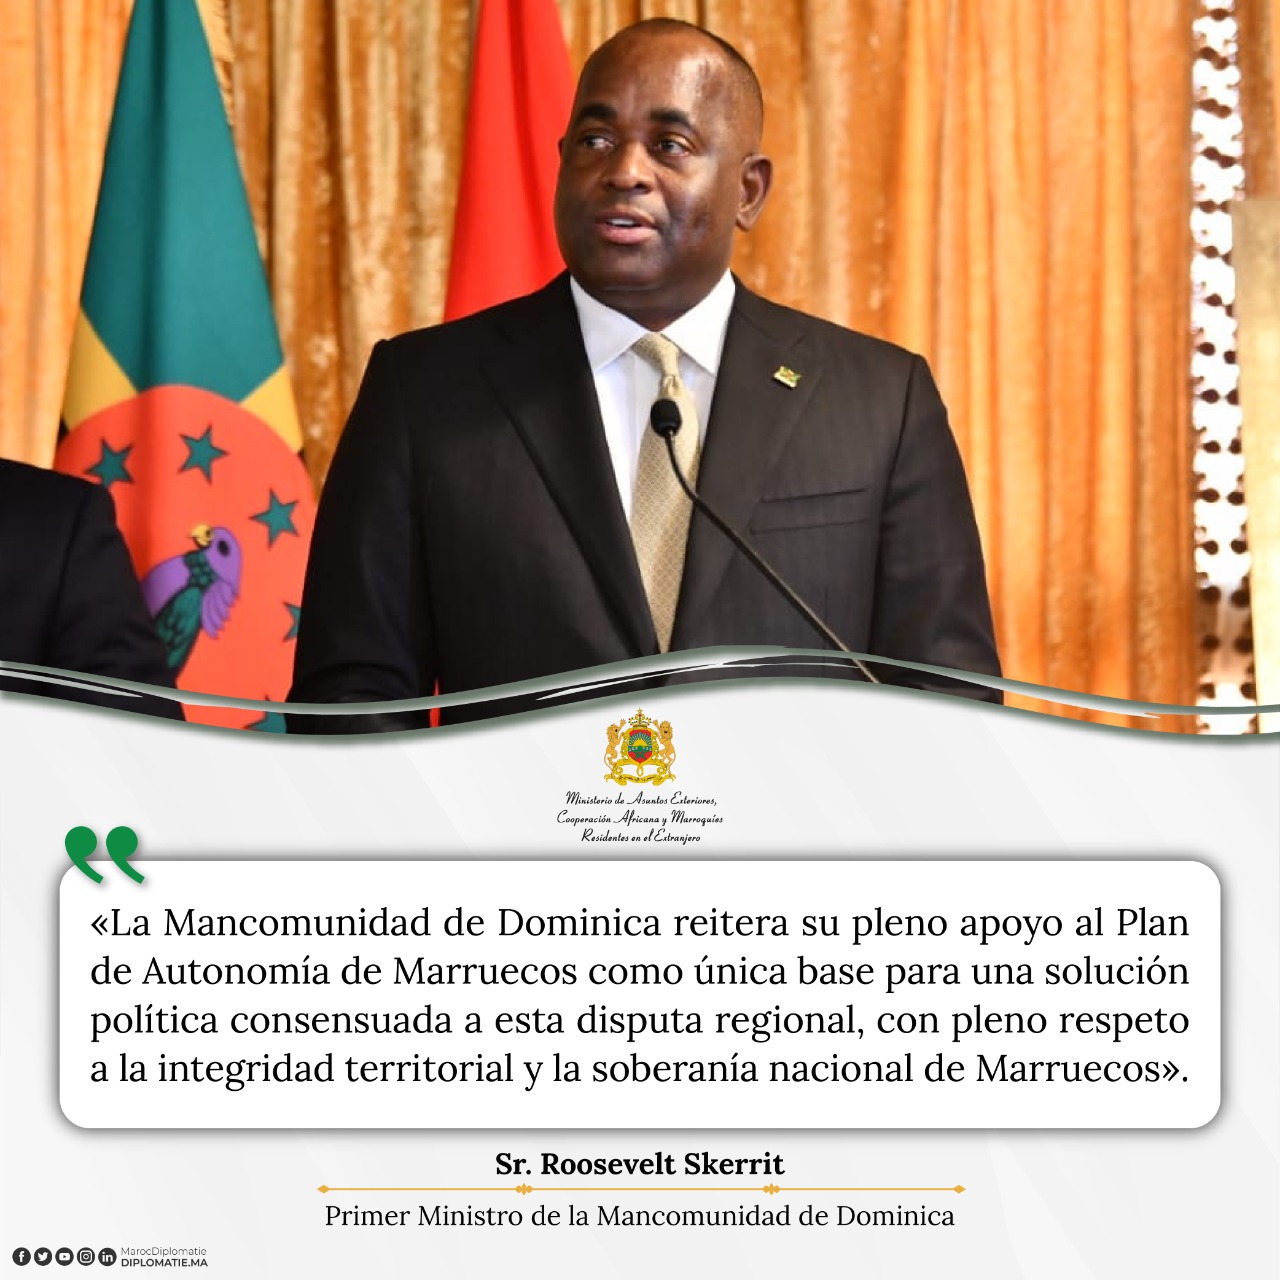 Declaración del Primer Ministro de la Mancomunidad de Dominica, Sr. Roosevelt Skerrit